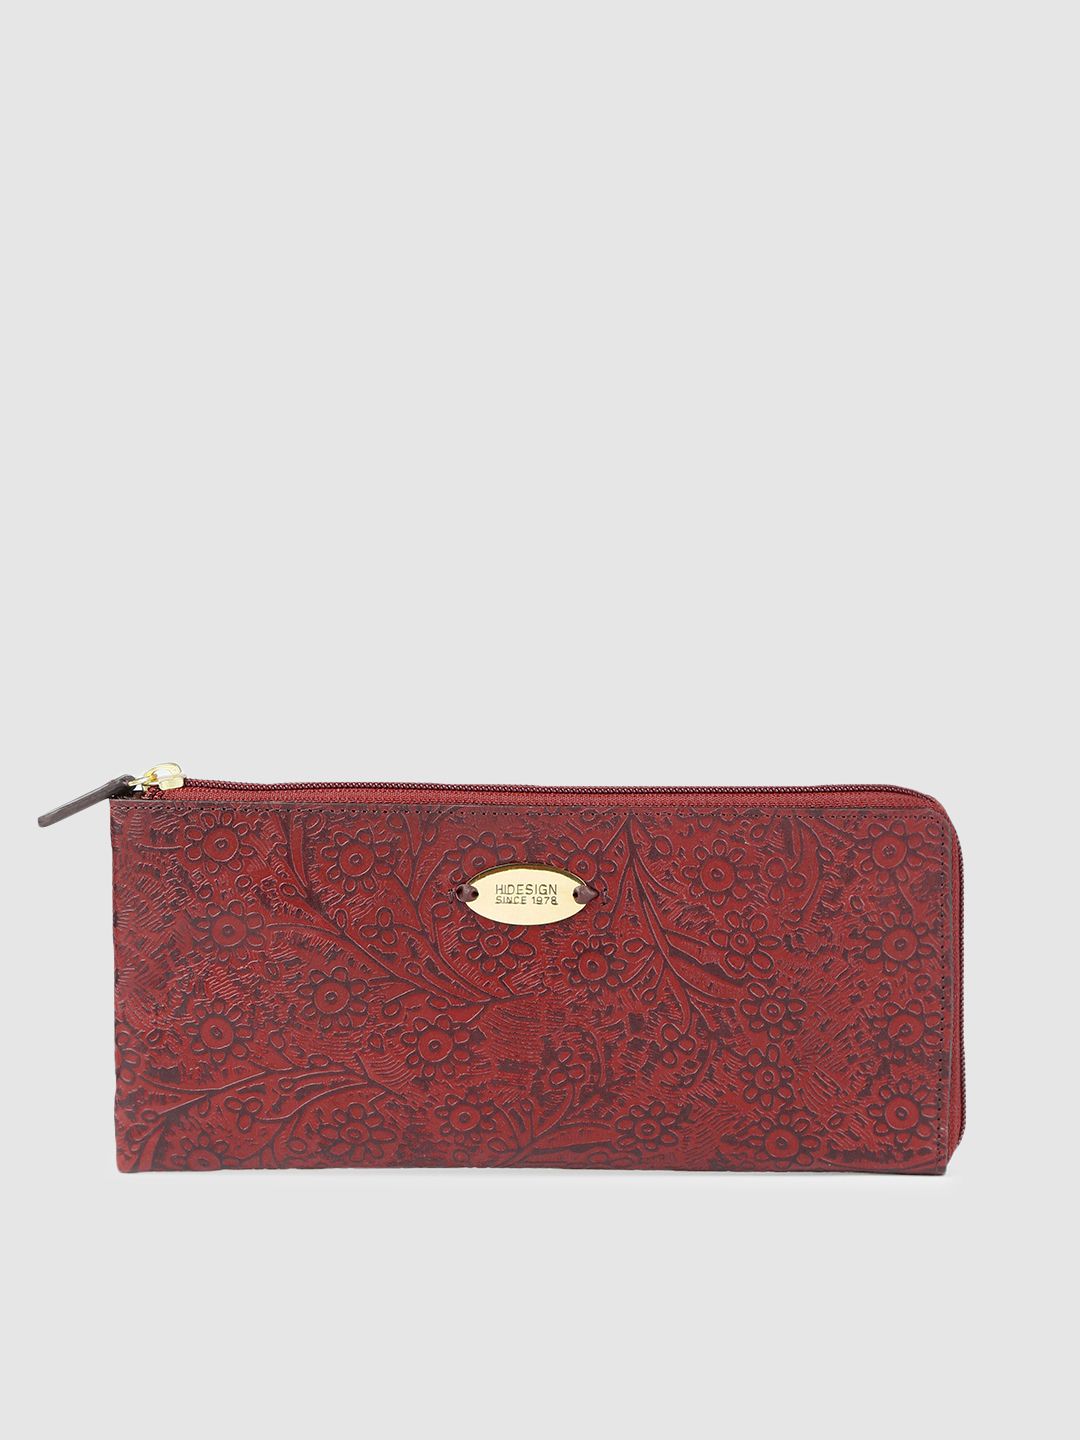 Hidesign Women Red Self Design Zip Around Leather Wallet Price in India